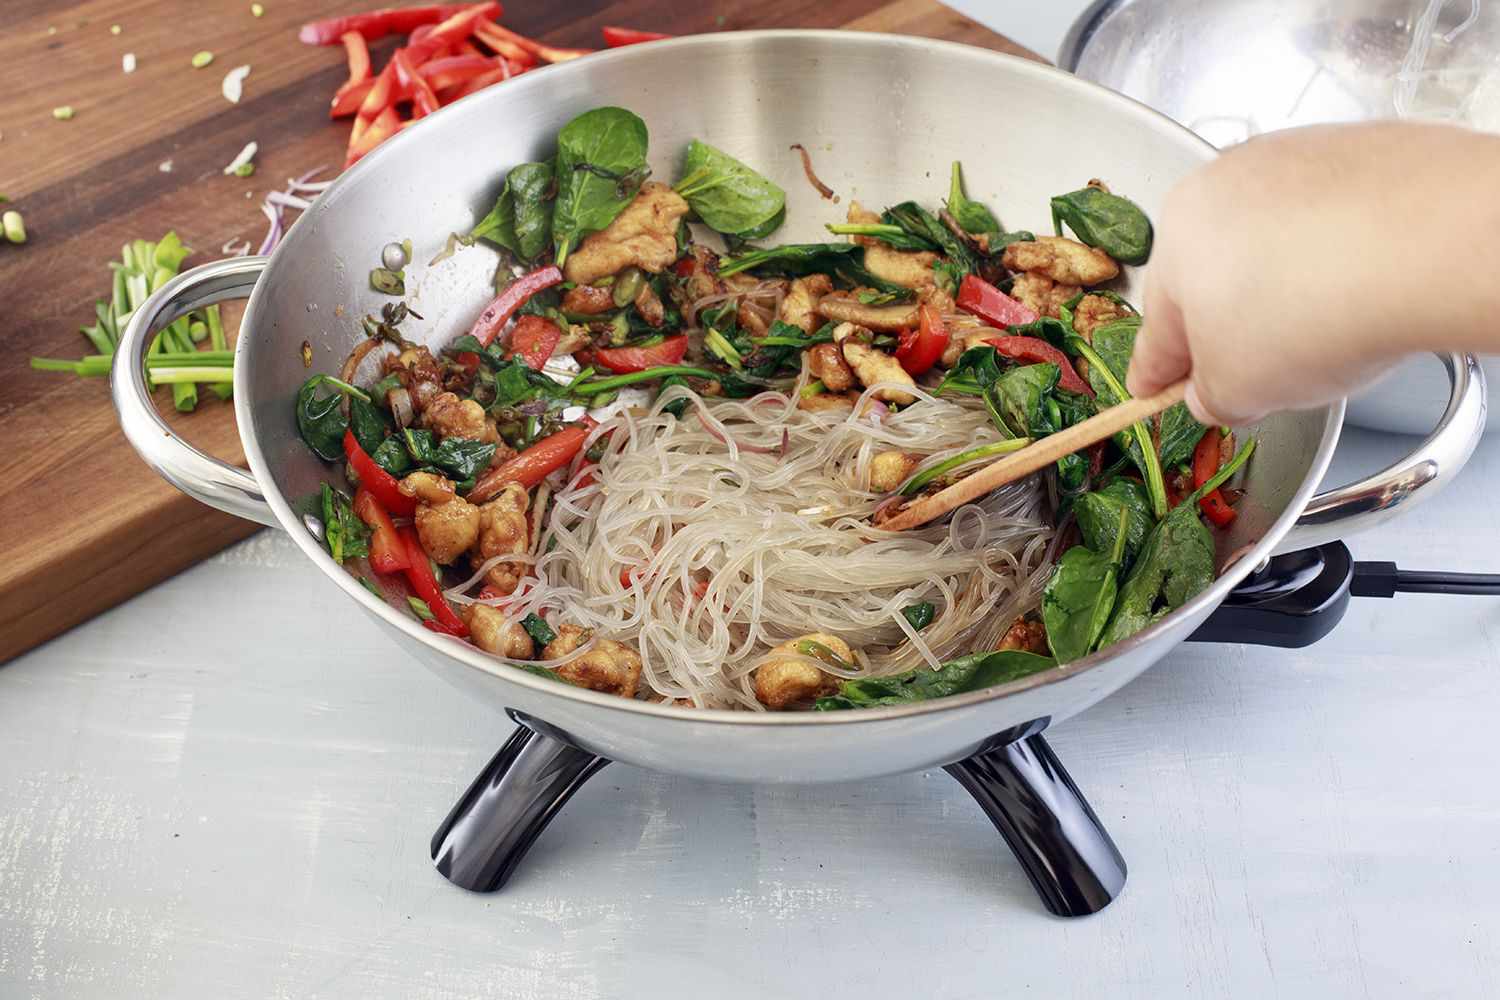 presto-stainless-steel-electric-wok-food